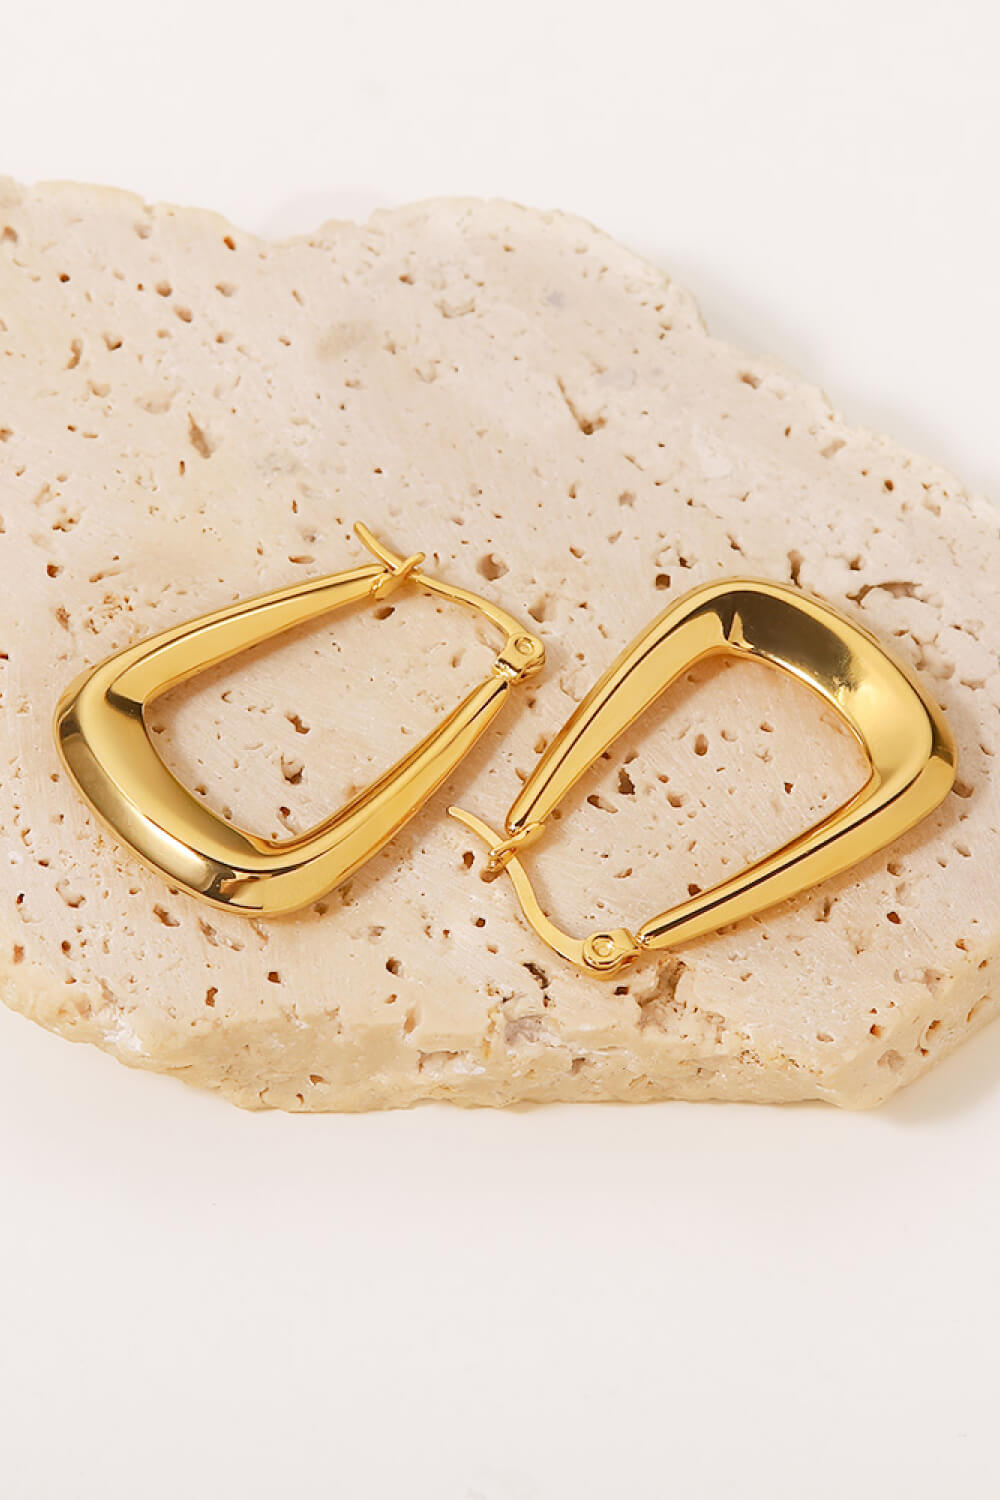 18K Gold-Plated Geometric Earrings - Earrings - FITGGINS